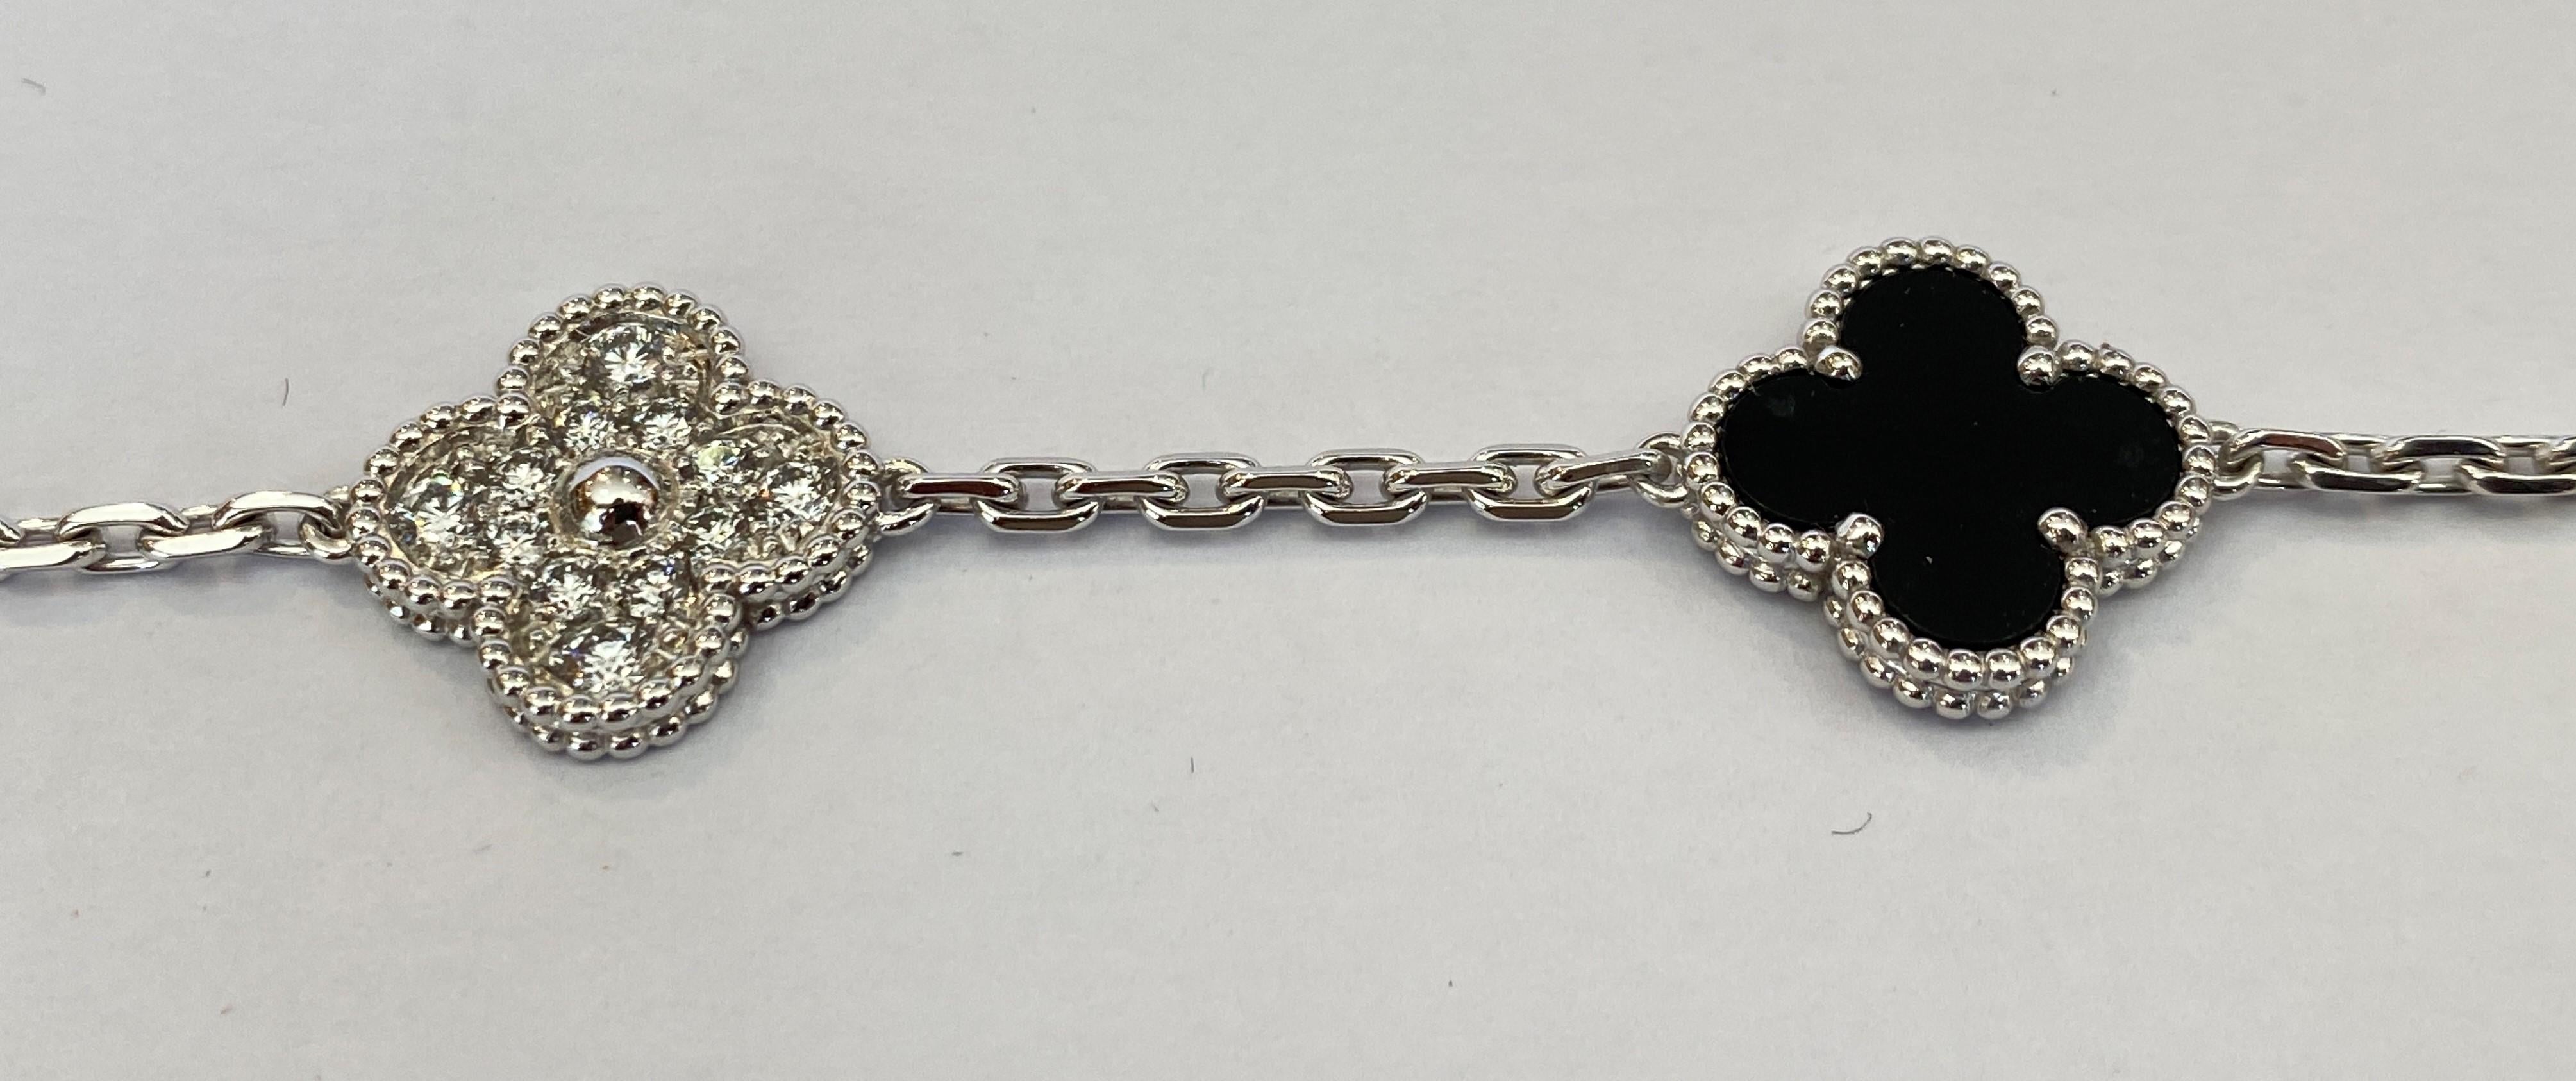 Brilliant Cut Van Cleef & Arpels Alhambra Bracelet in Diamonds and Onyx in 18k White Gold